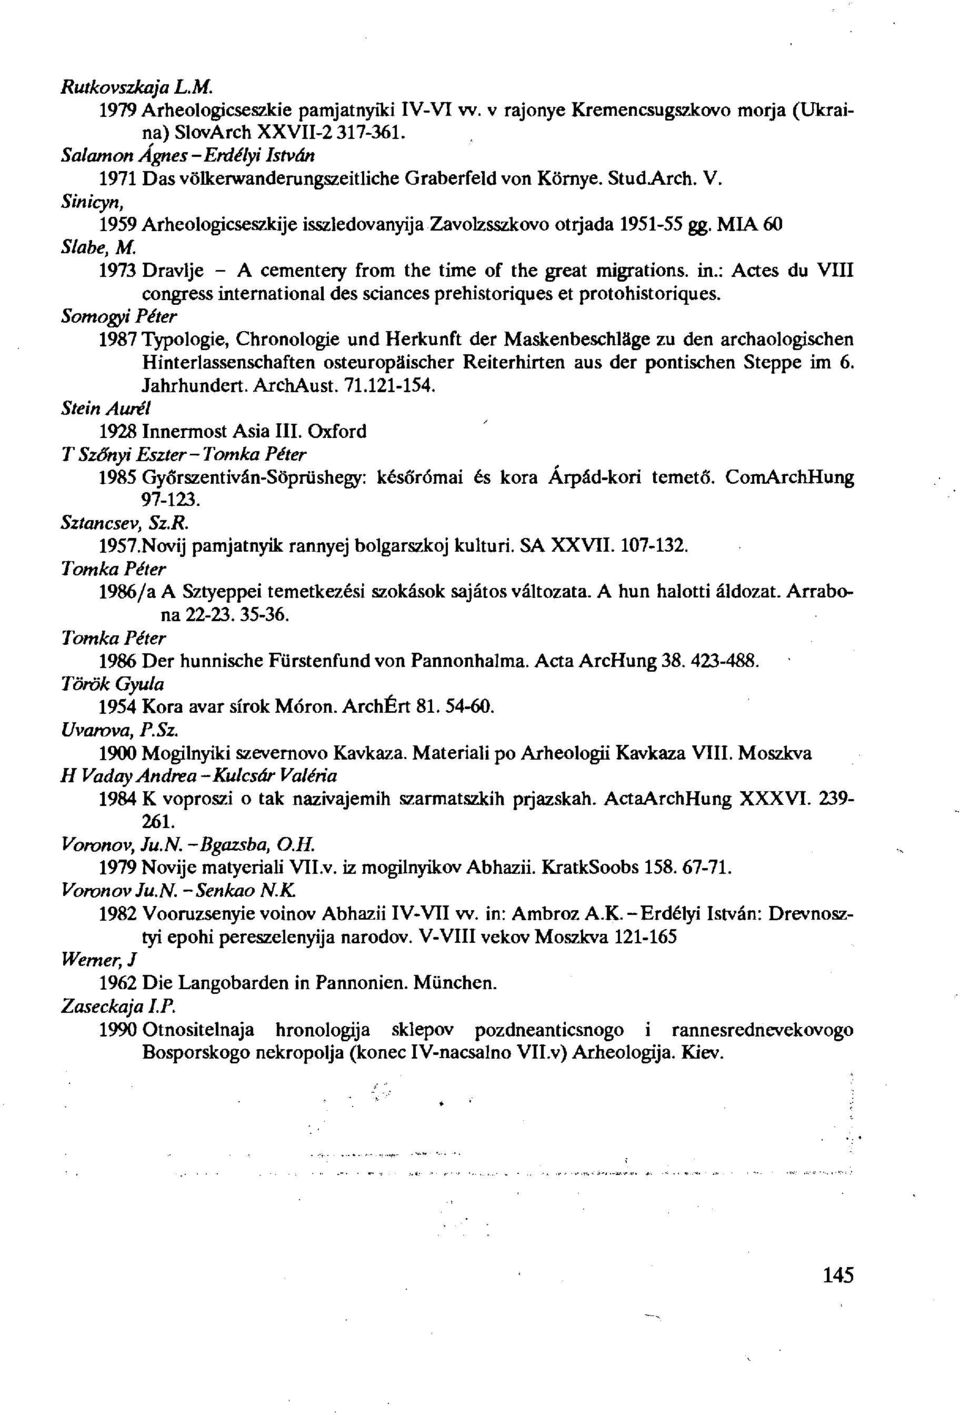 MIA 60 Slabe, M. 1973 Dravlje - A cementery from the time of the great migrations, in.: Actes du VIII congress international des sciences préhistoriques et protohistoriques.